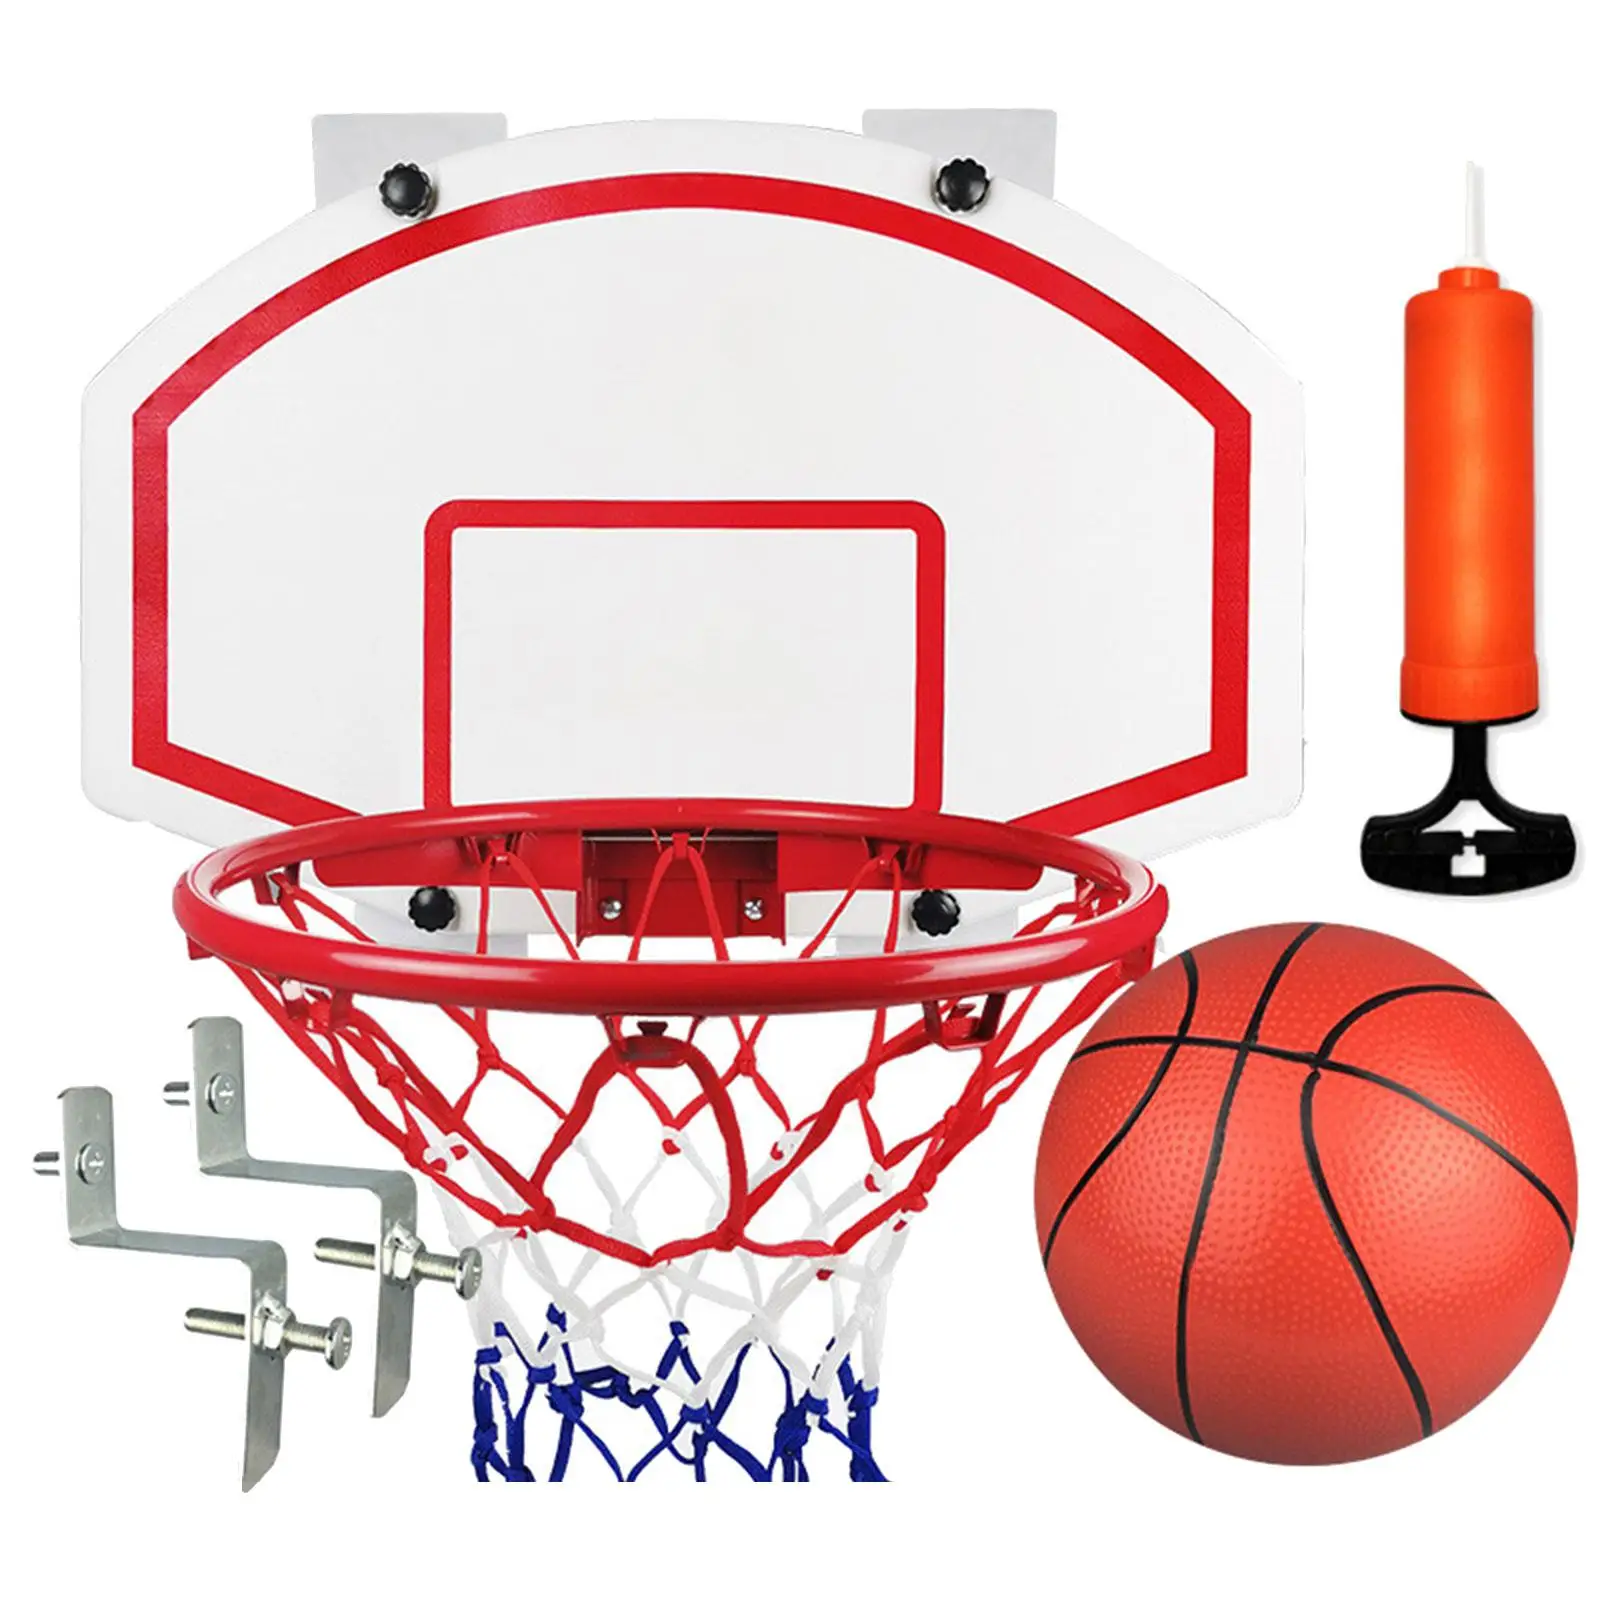 Kids Mini Basket Ball Board Toy Set for Basketball Training Age 3 4 5 6 7 8+